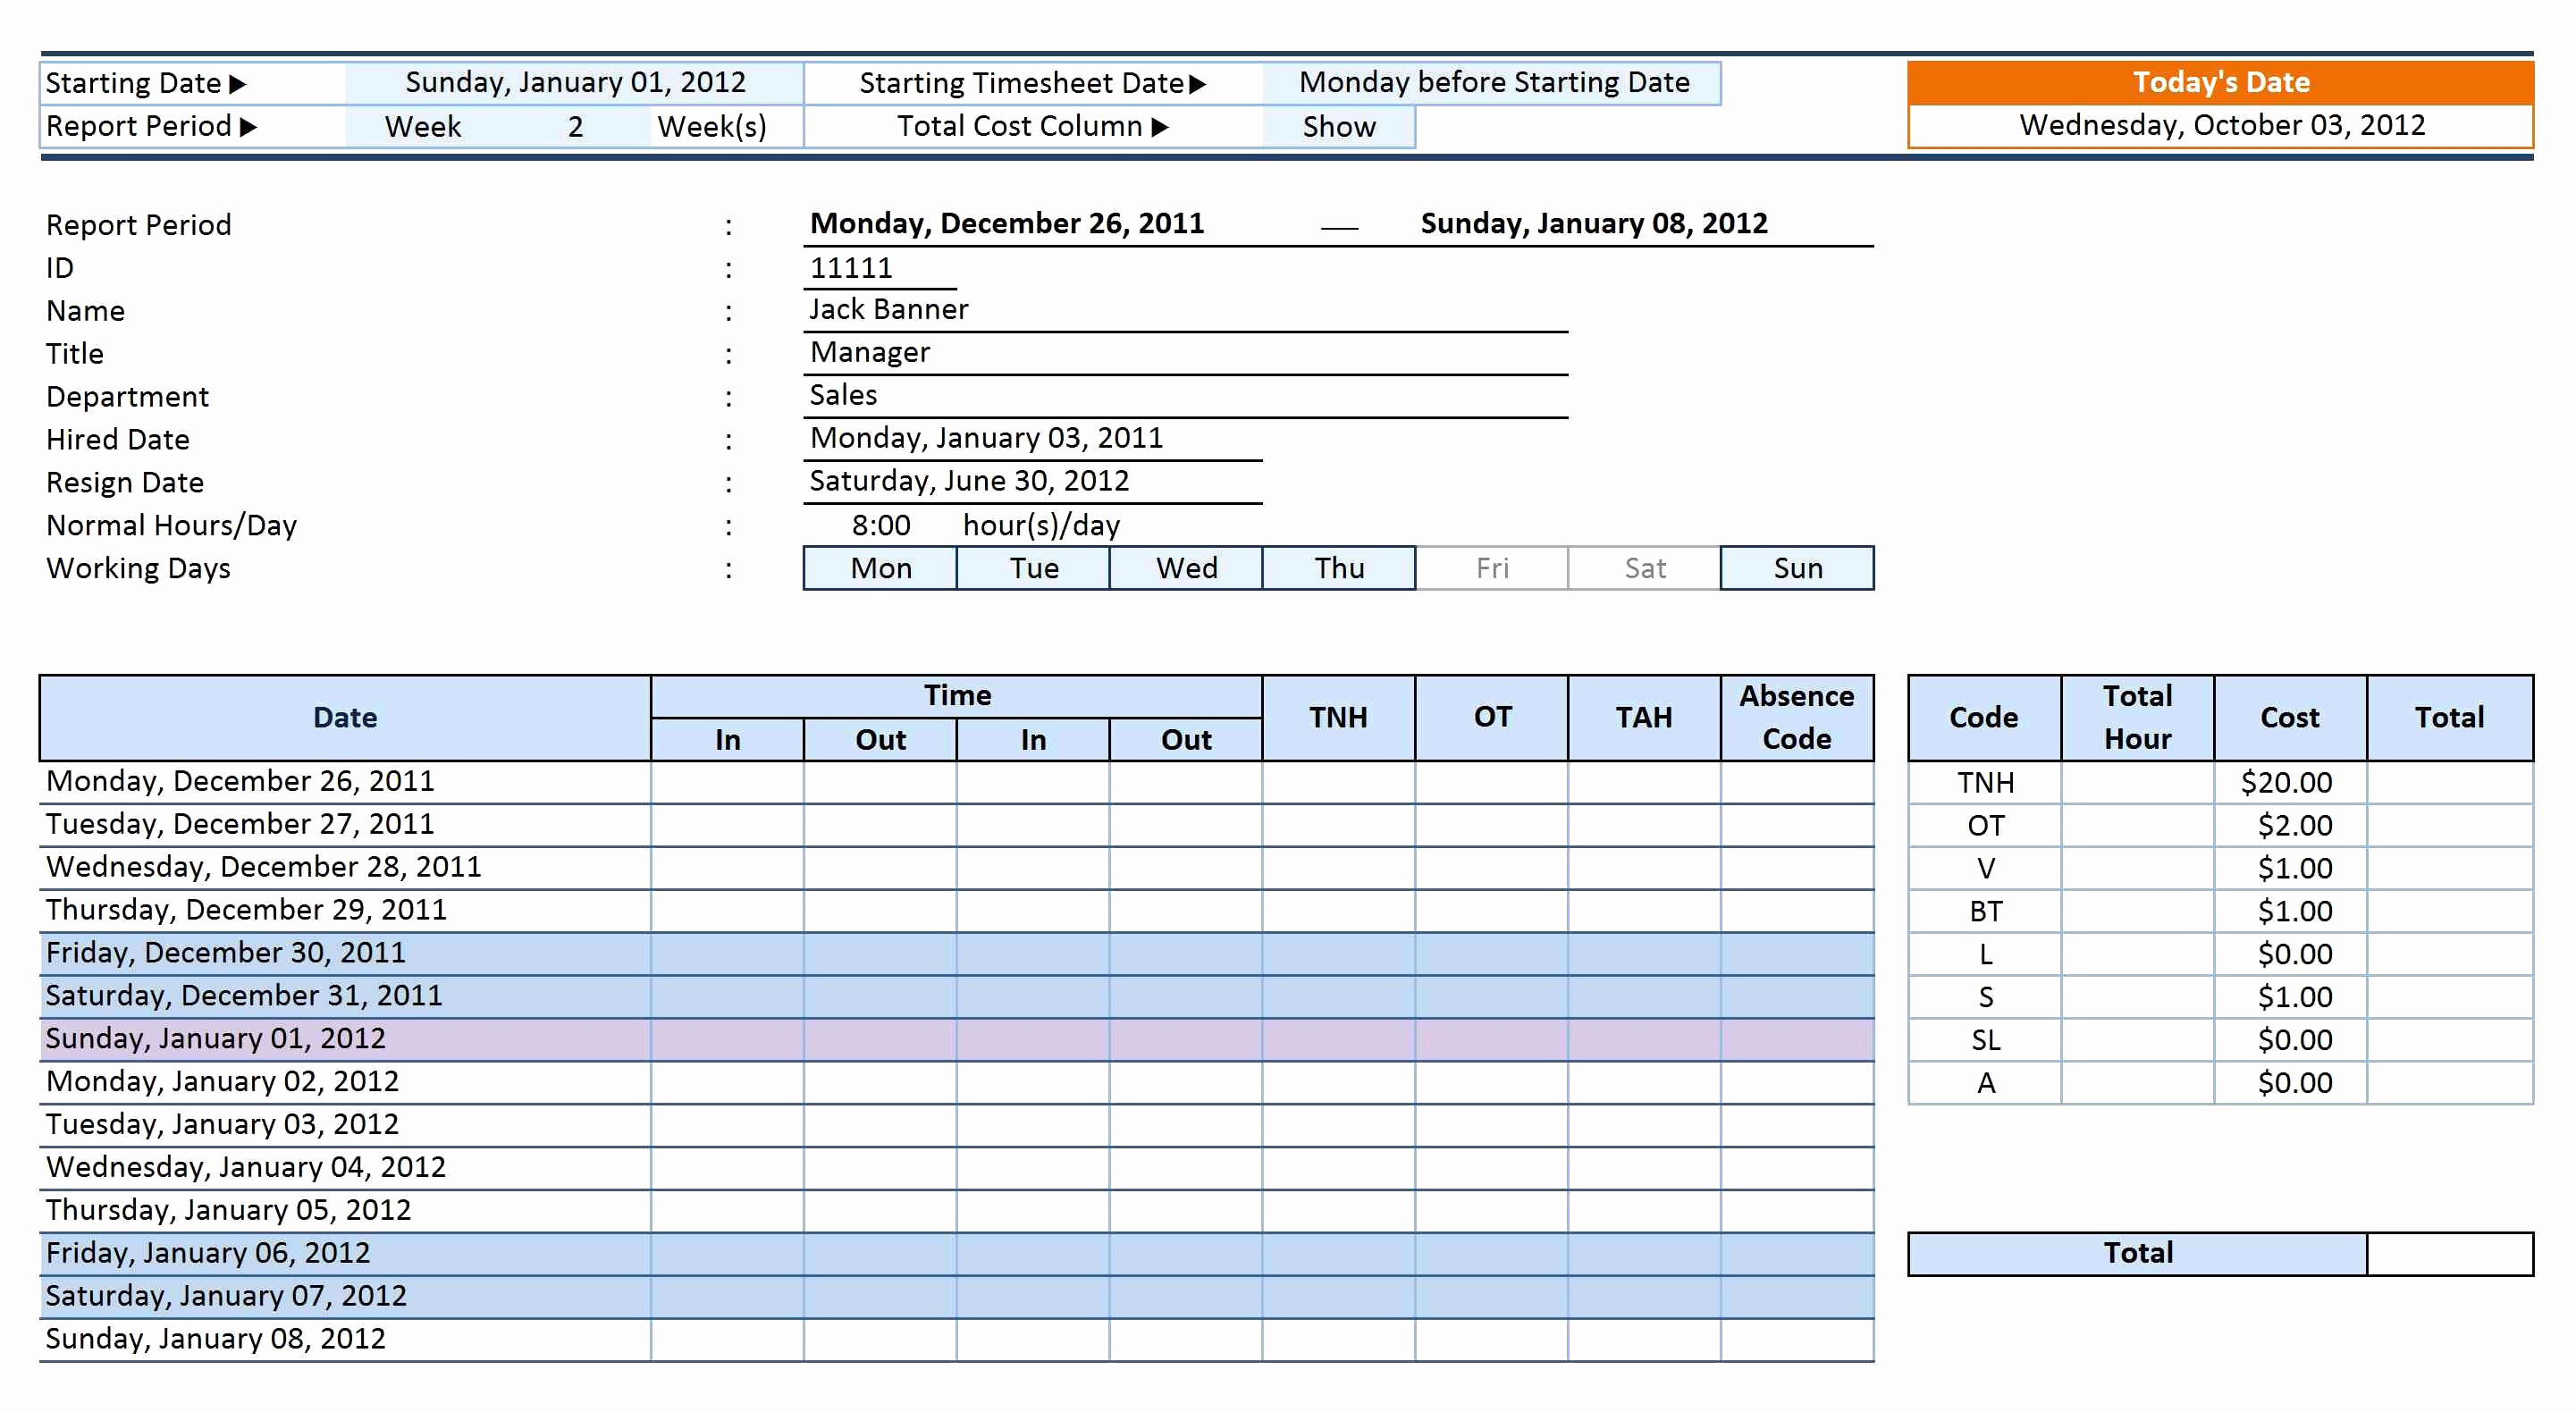 Employee Point System Spreadsheet Regarding Employee Point System Spreadsheet – Spreadsheet Collections